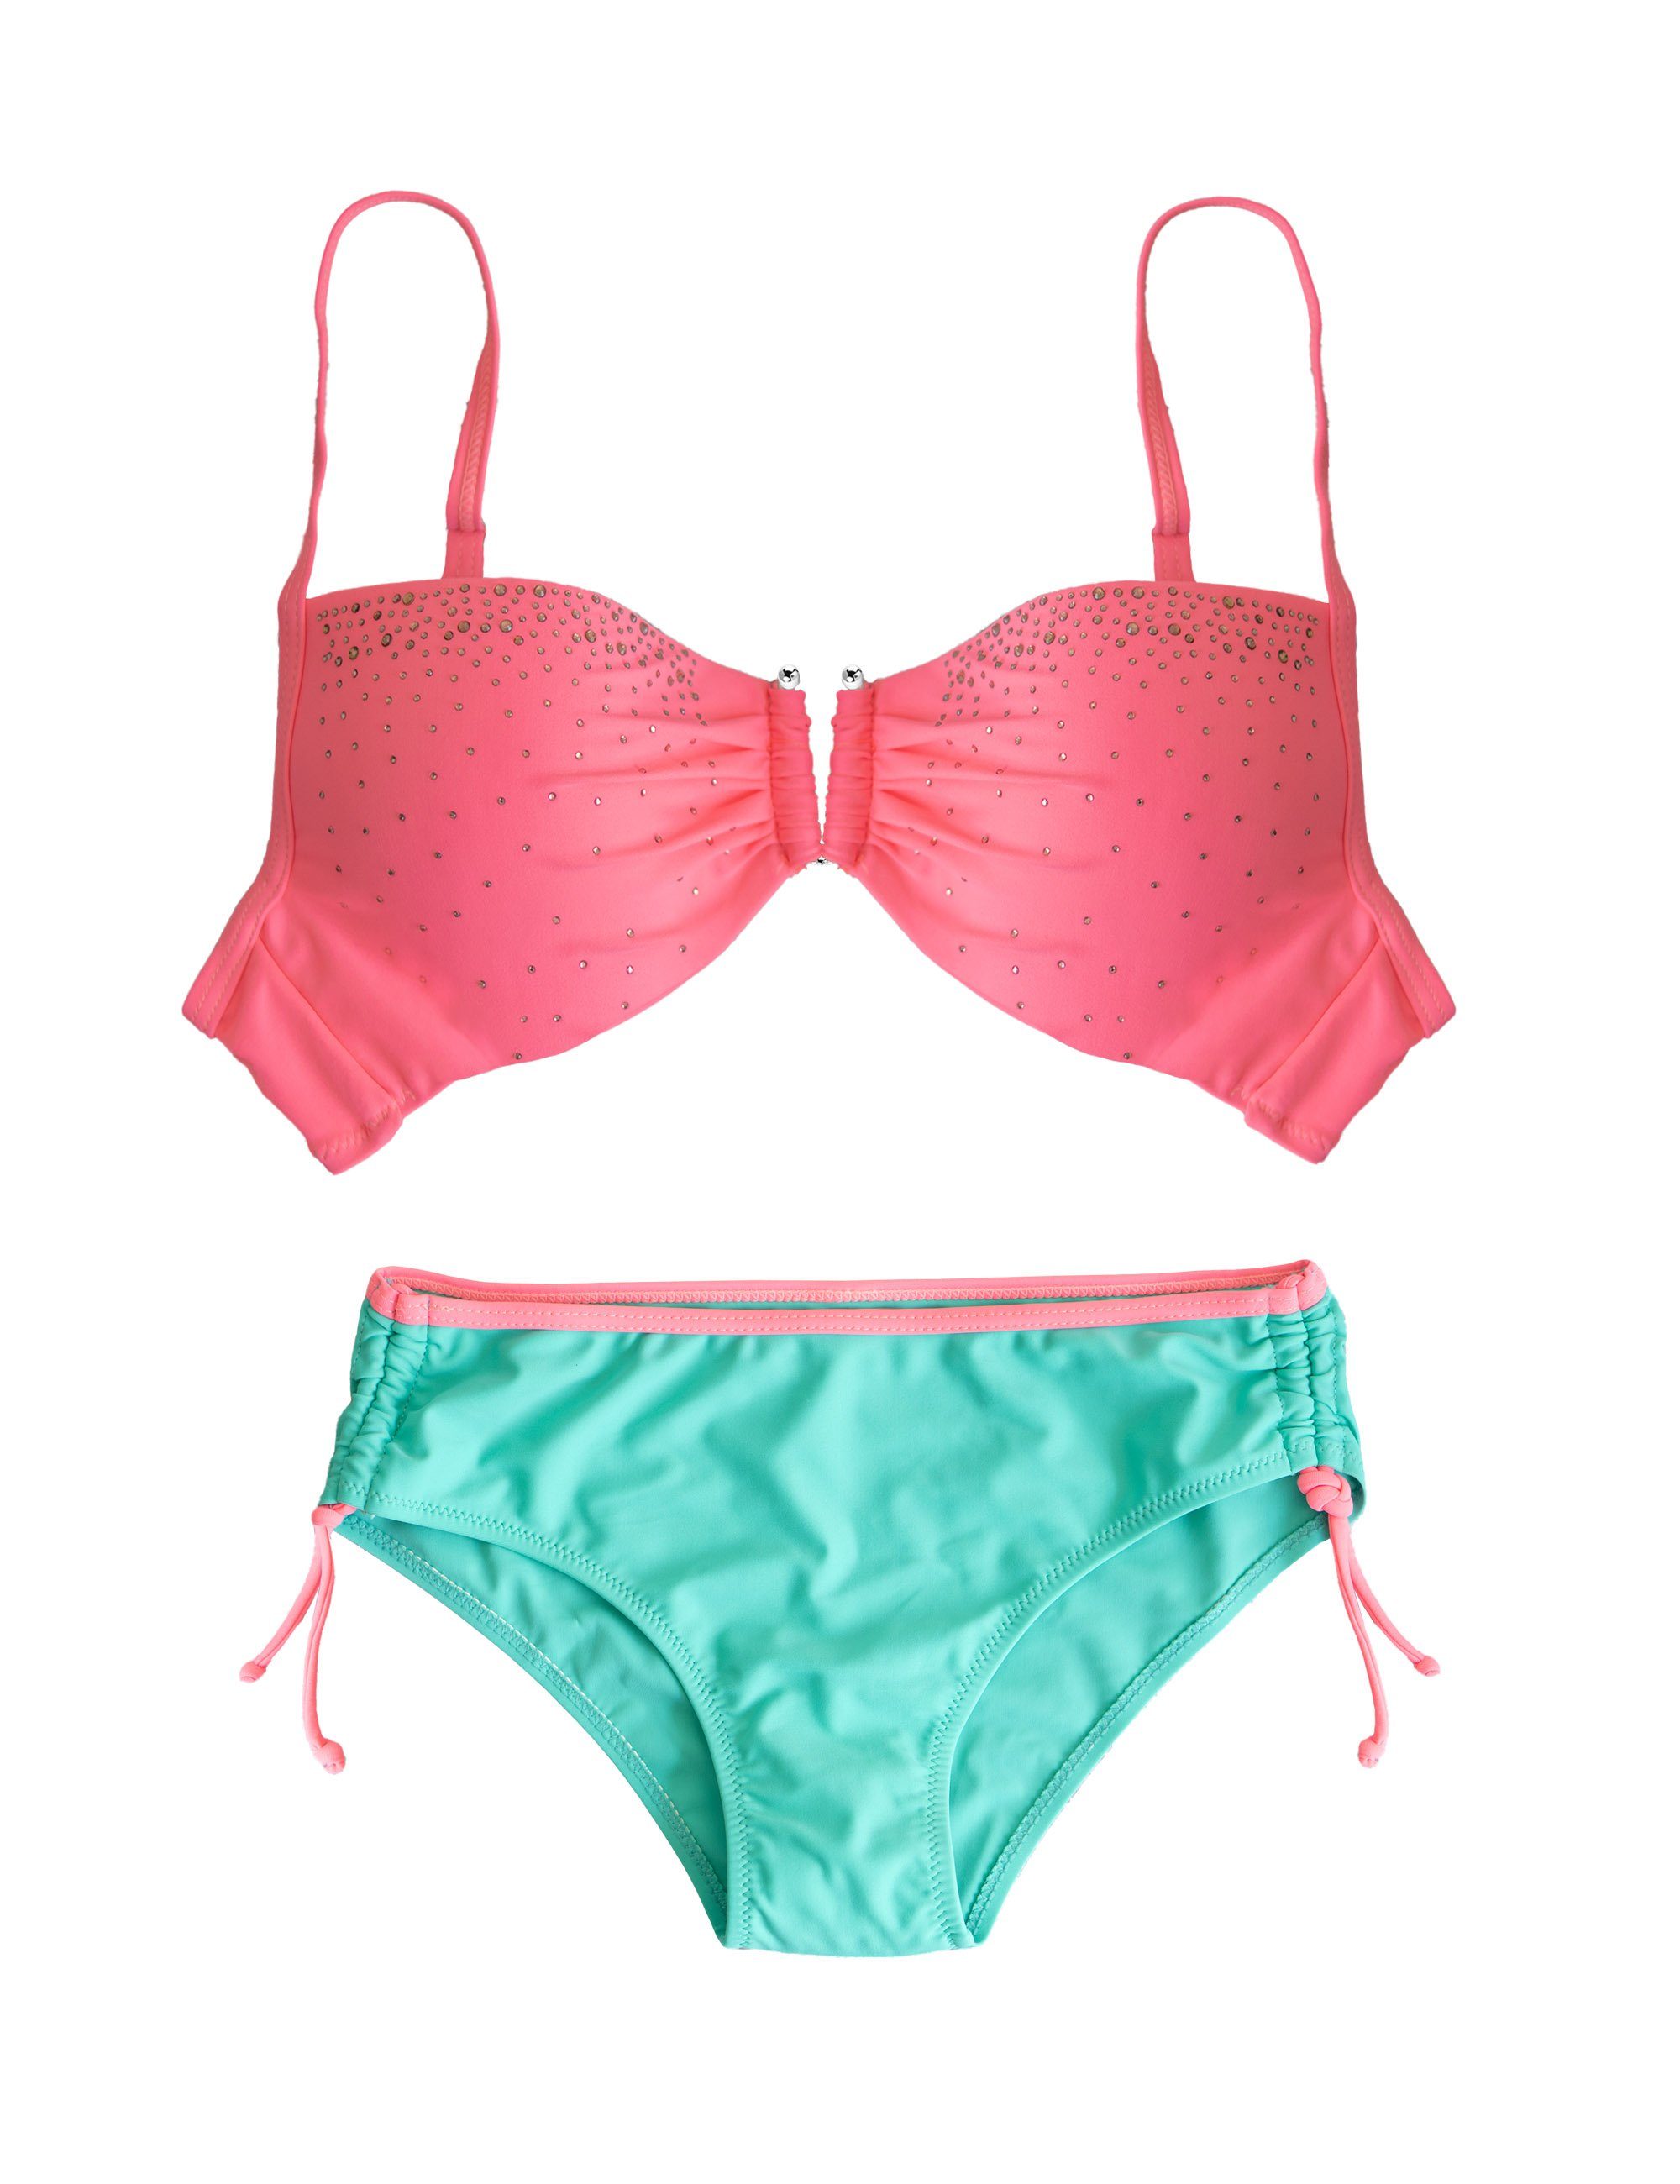 HEVENTON Push-Up-Bikini Coral Pink-Grün